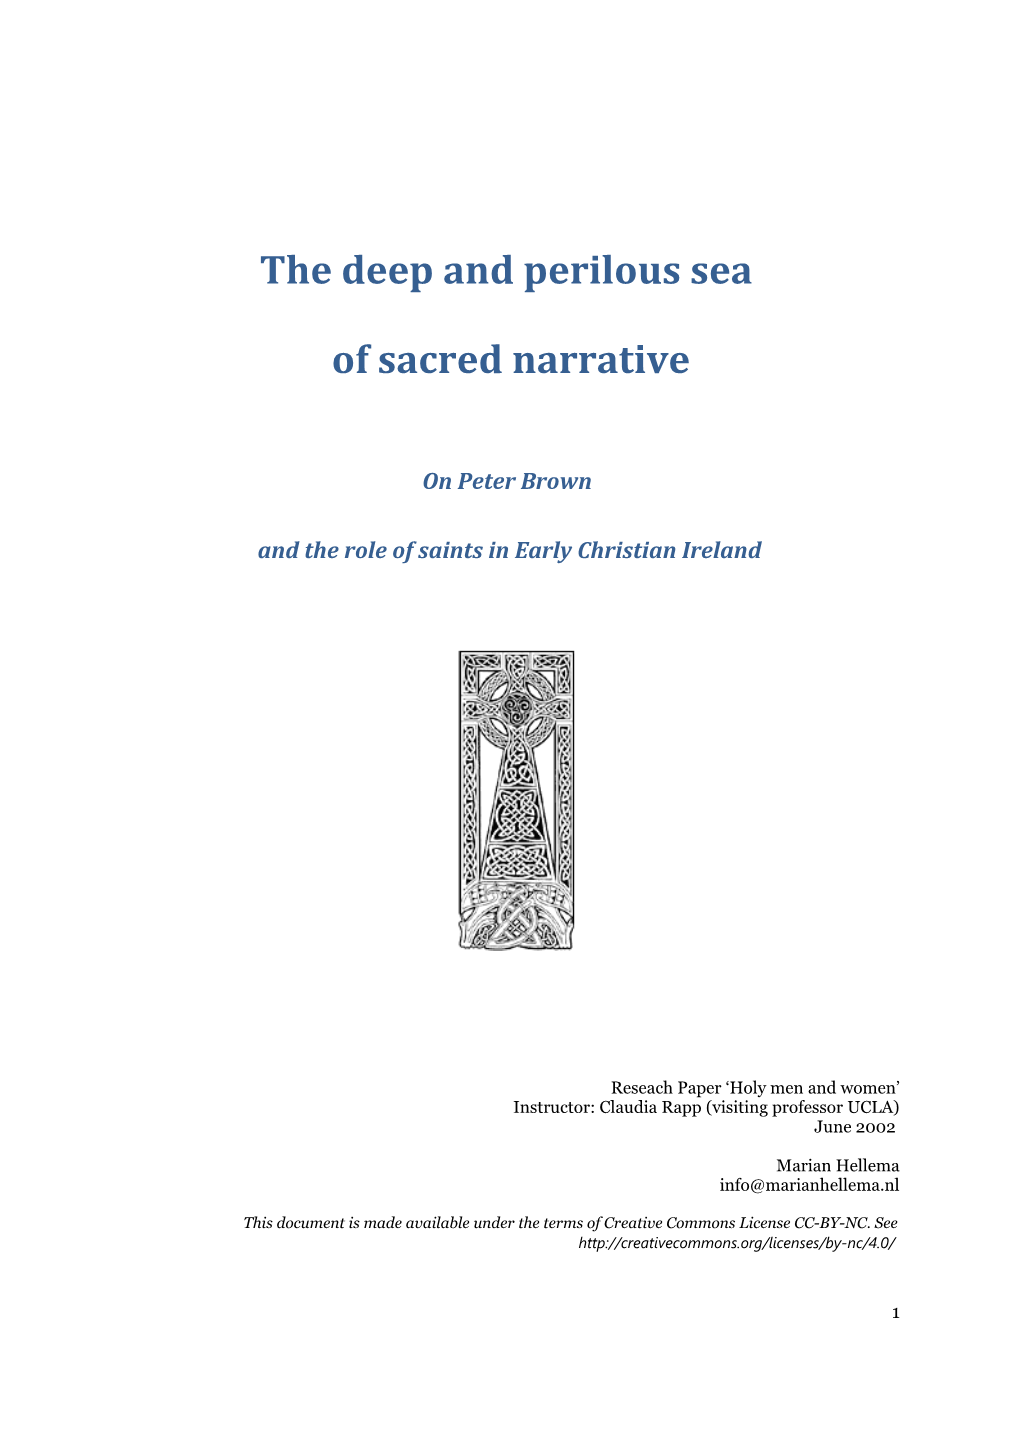 The Deep and Perilous Sea of Sacred Narrative